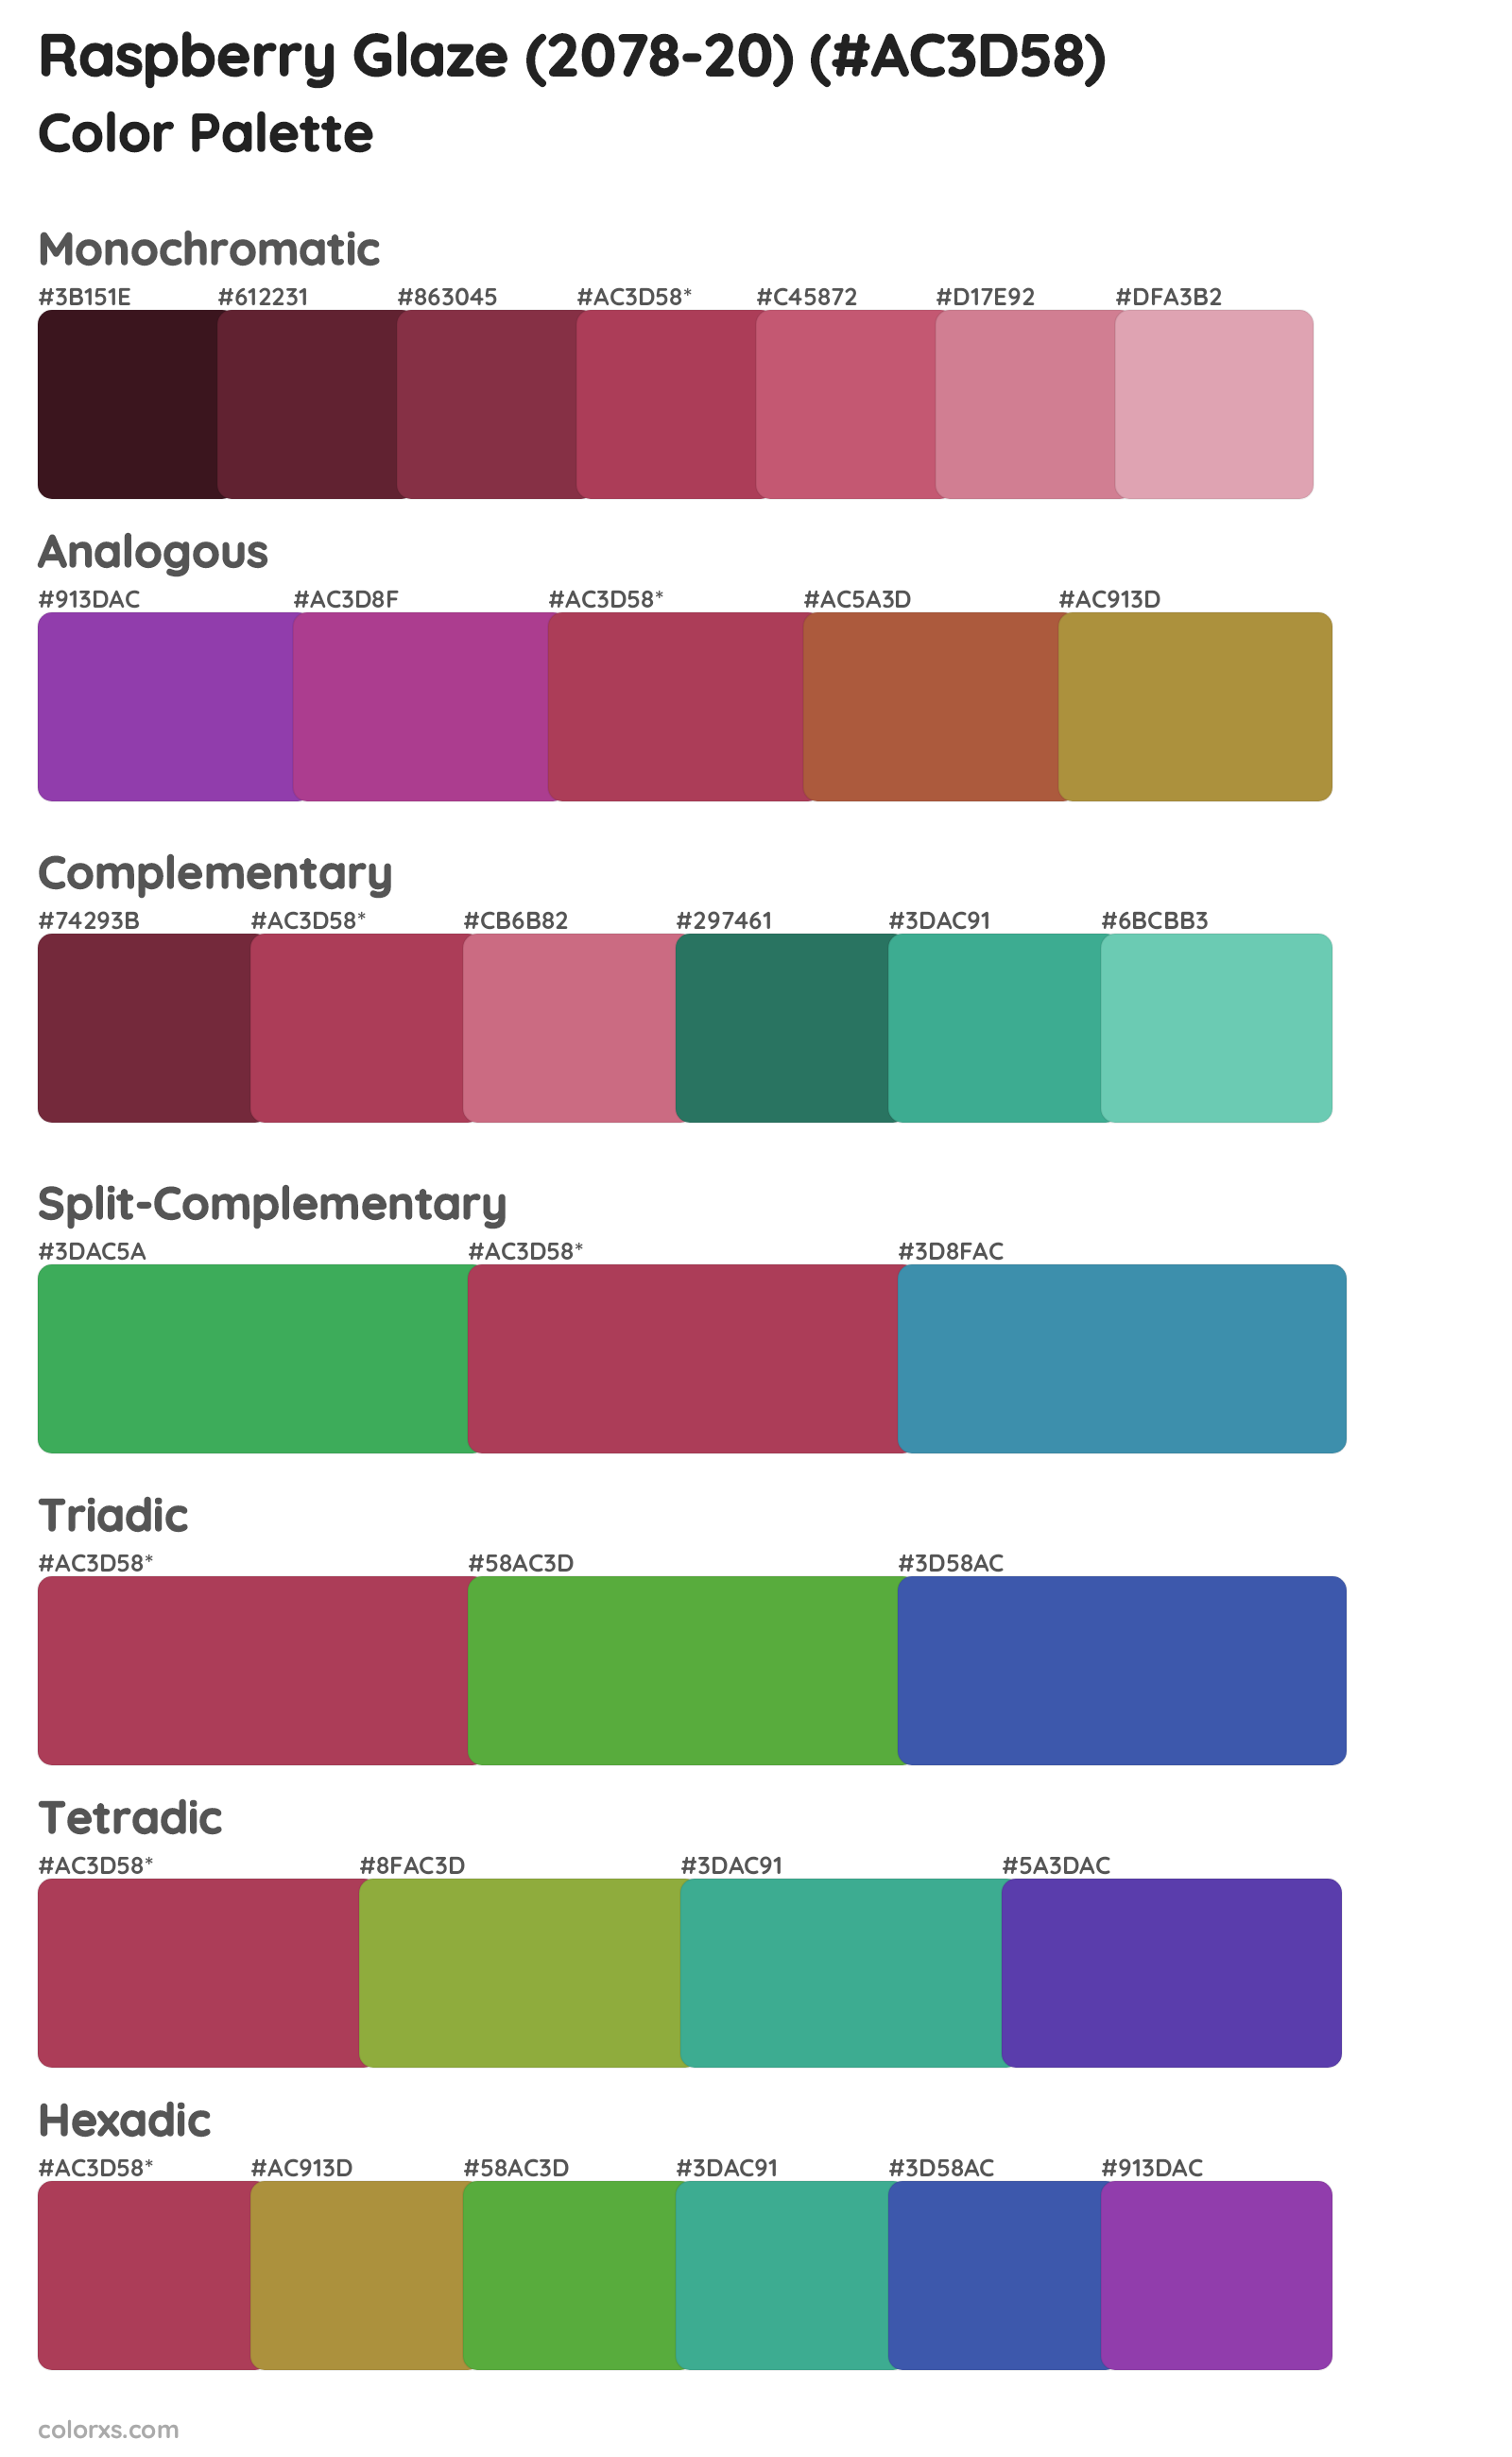 Raspberry Glaze (2078-20) Color Scheme Palettes